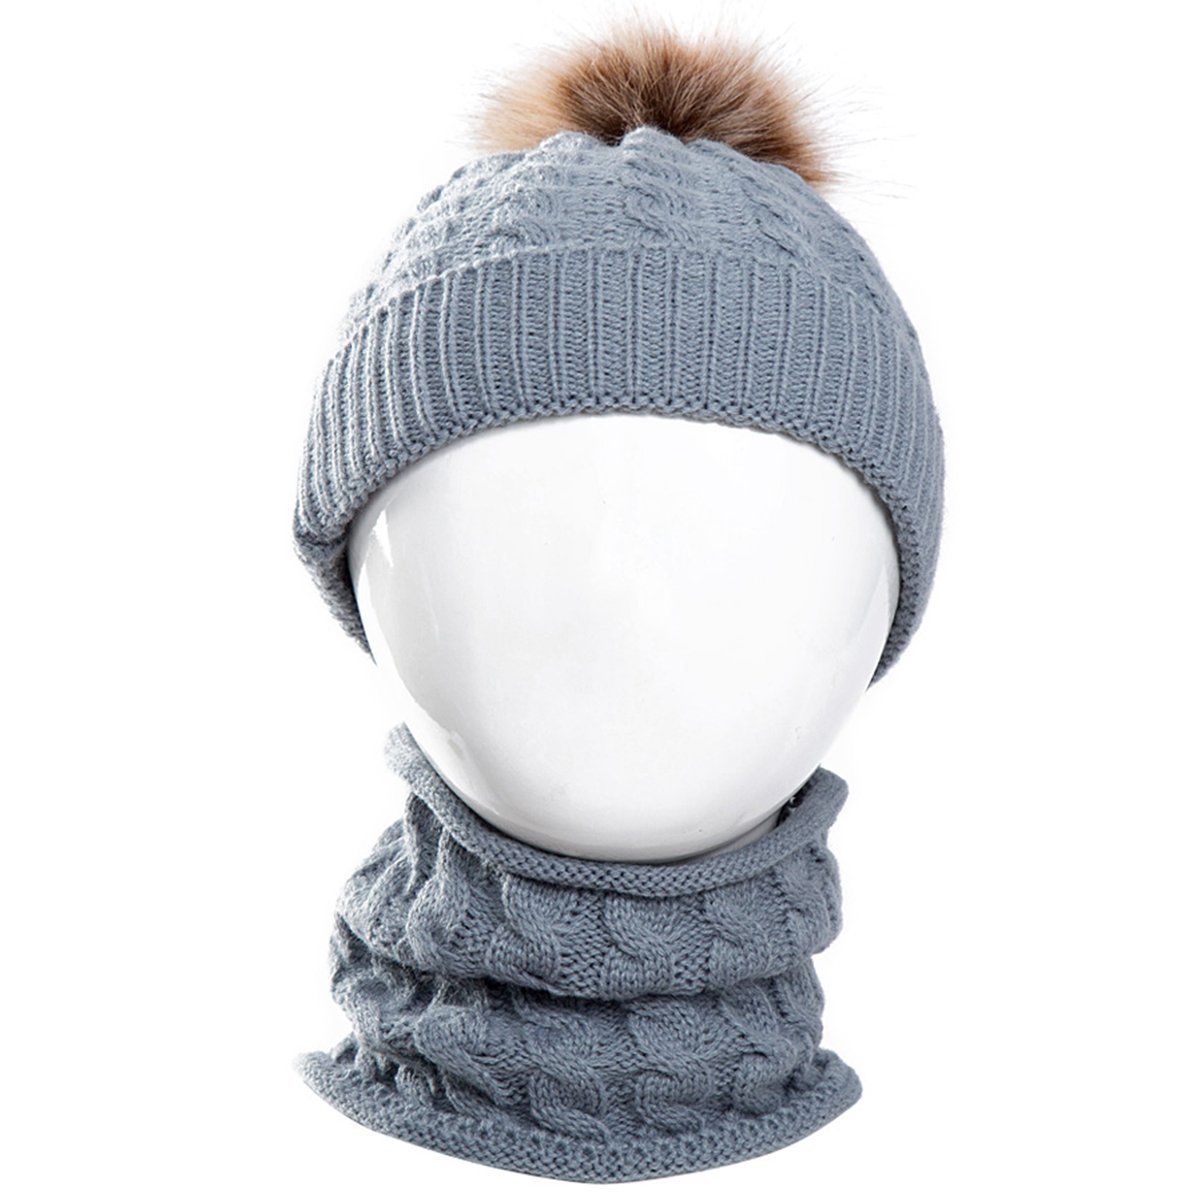 Toddler Kids Girl&Boy Baby Infant Winter Crochet Knit Hat Beanie Cap Scarf Set - image 4 of 5